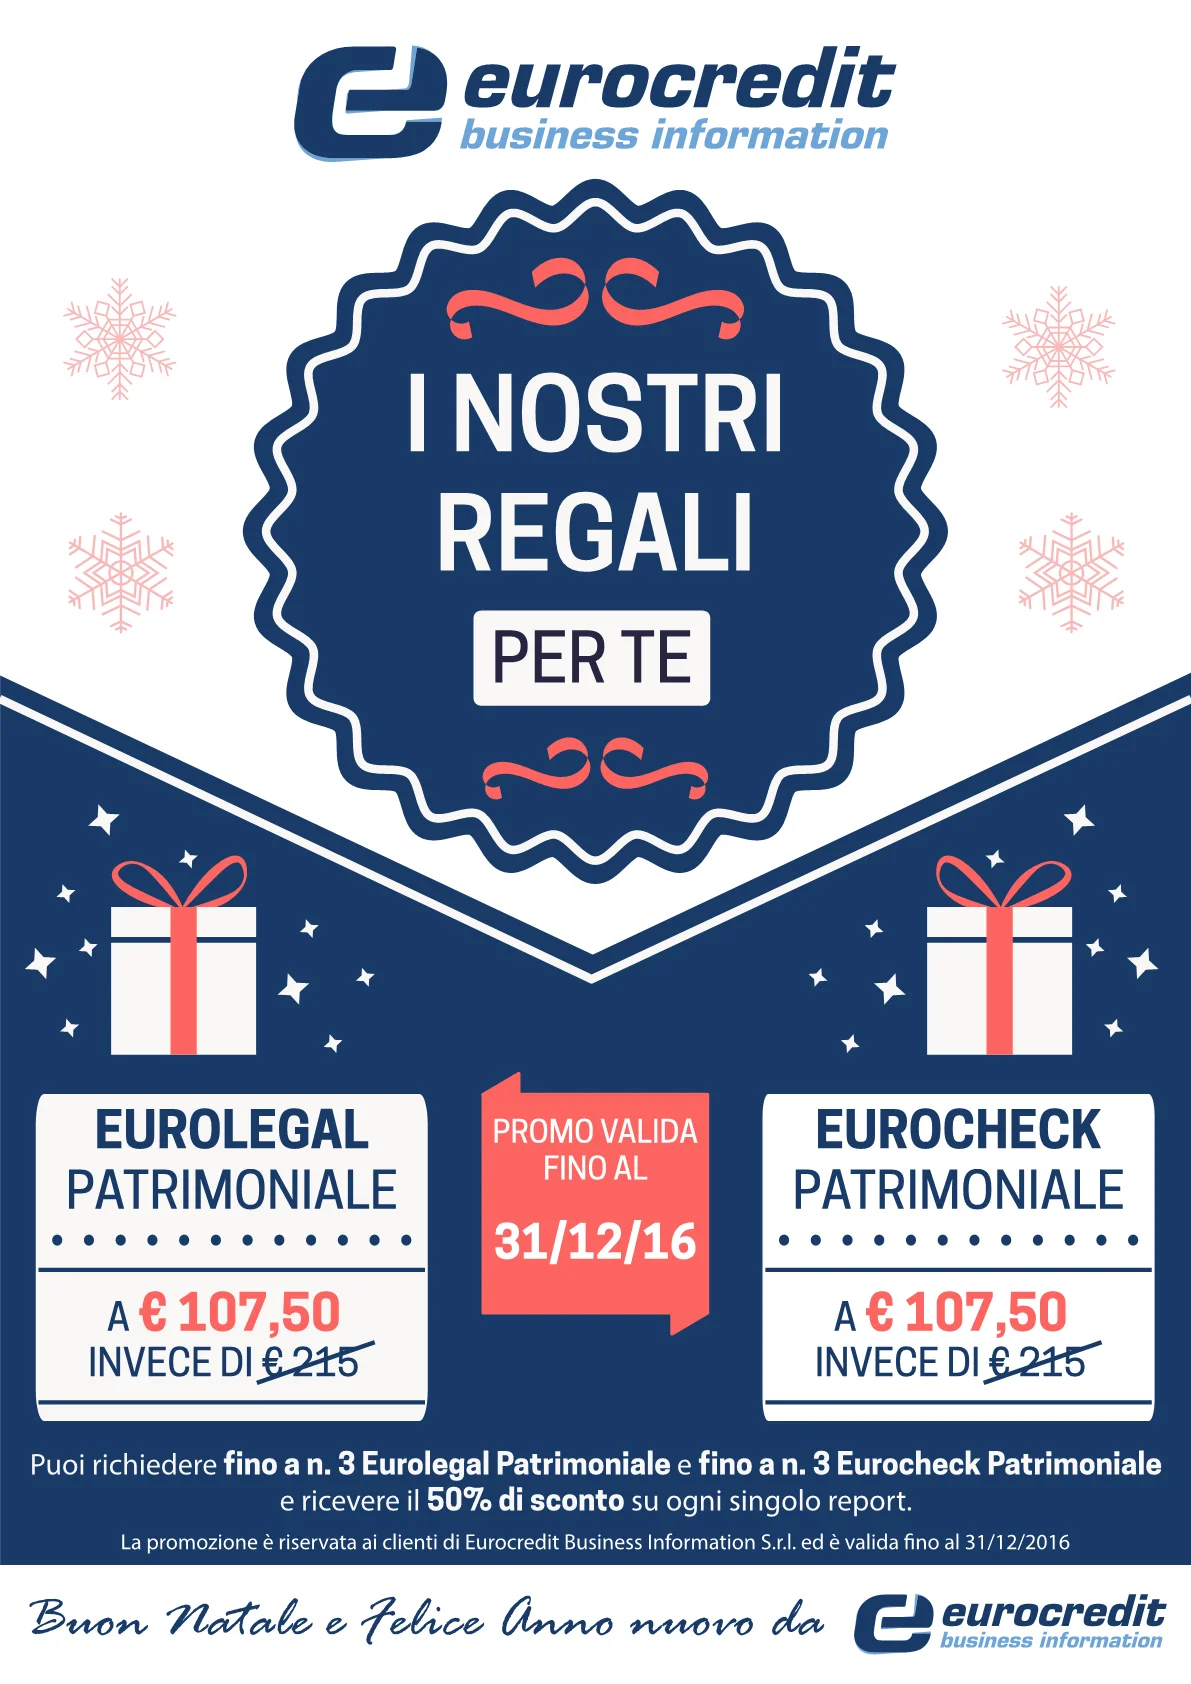 EUROCREDIT BUSINESS INFORMATION promozione Natale 2016